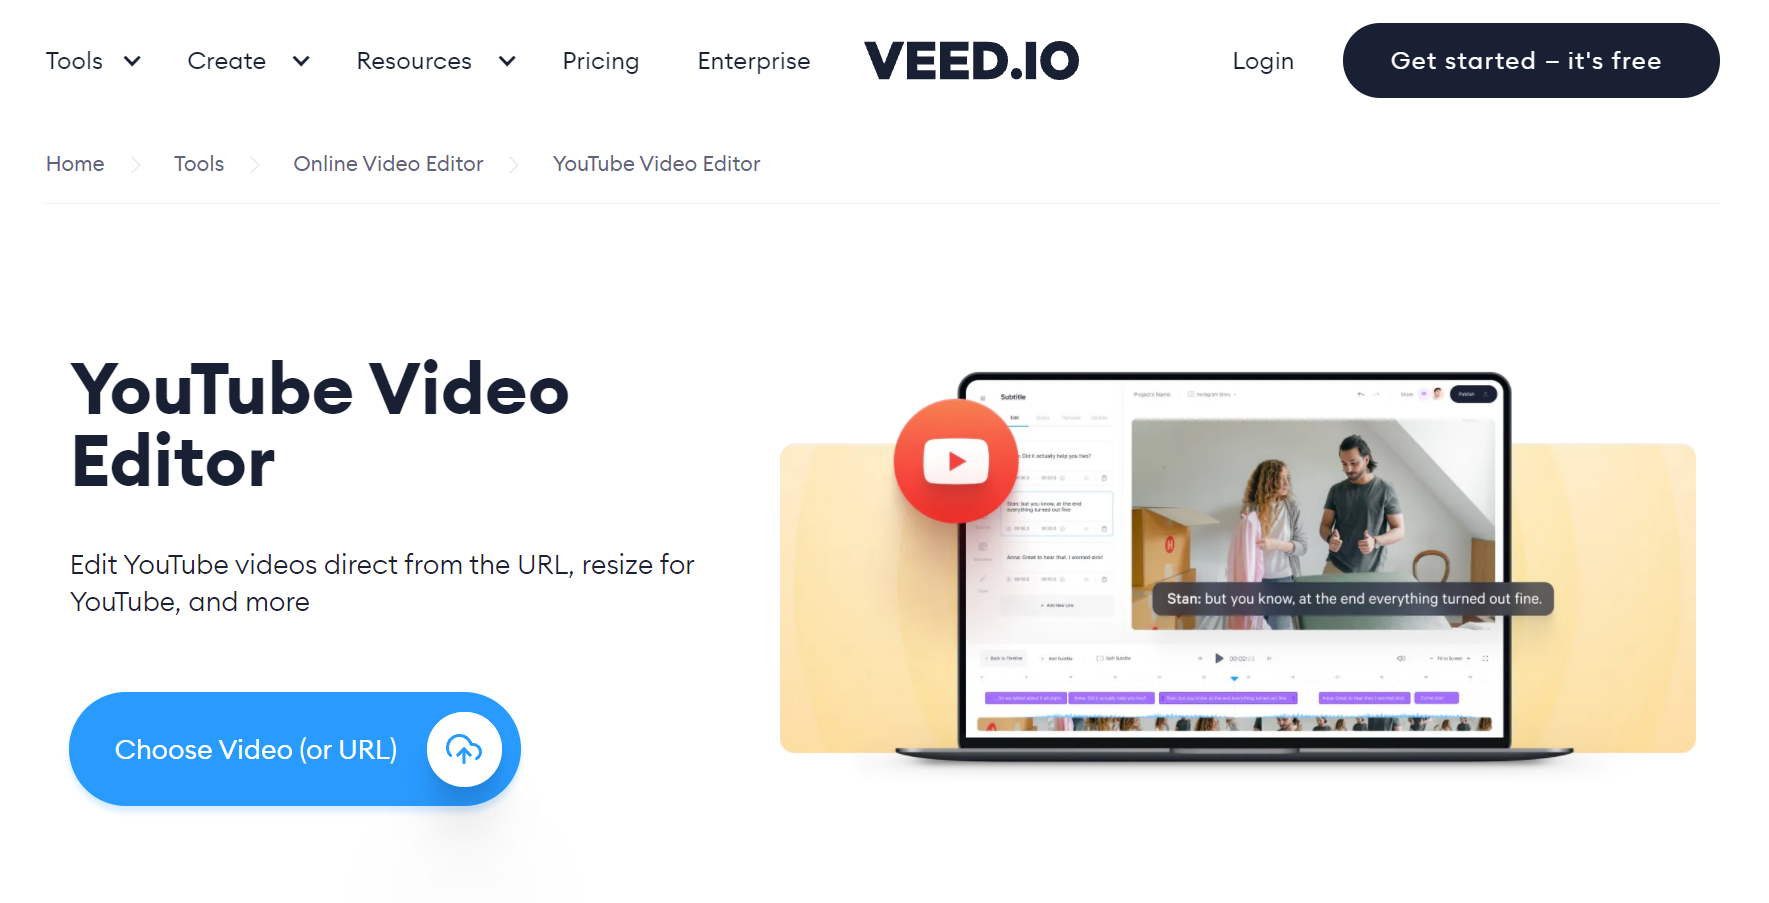 The Veed.io homepage.